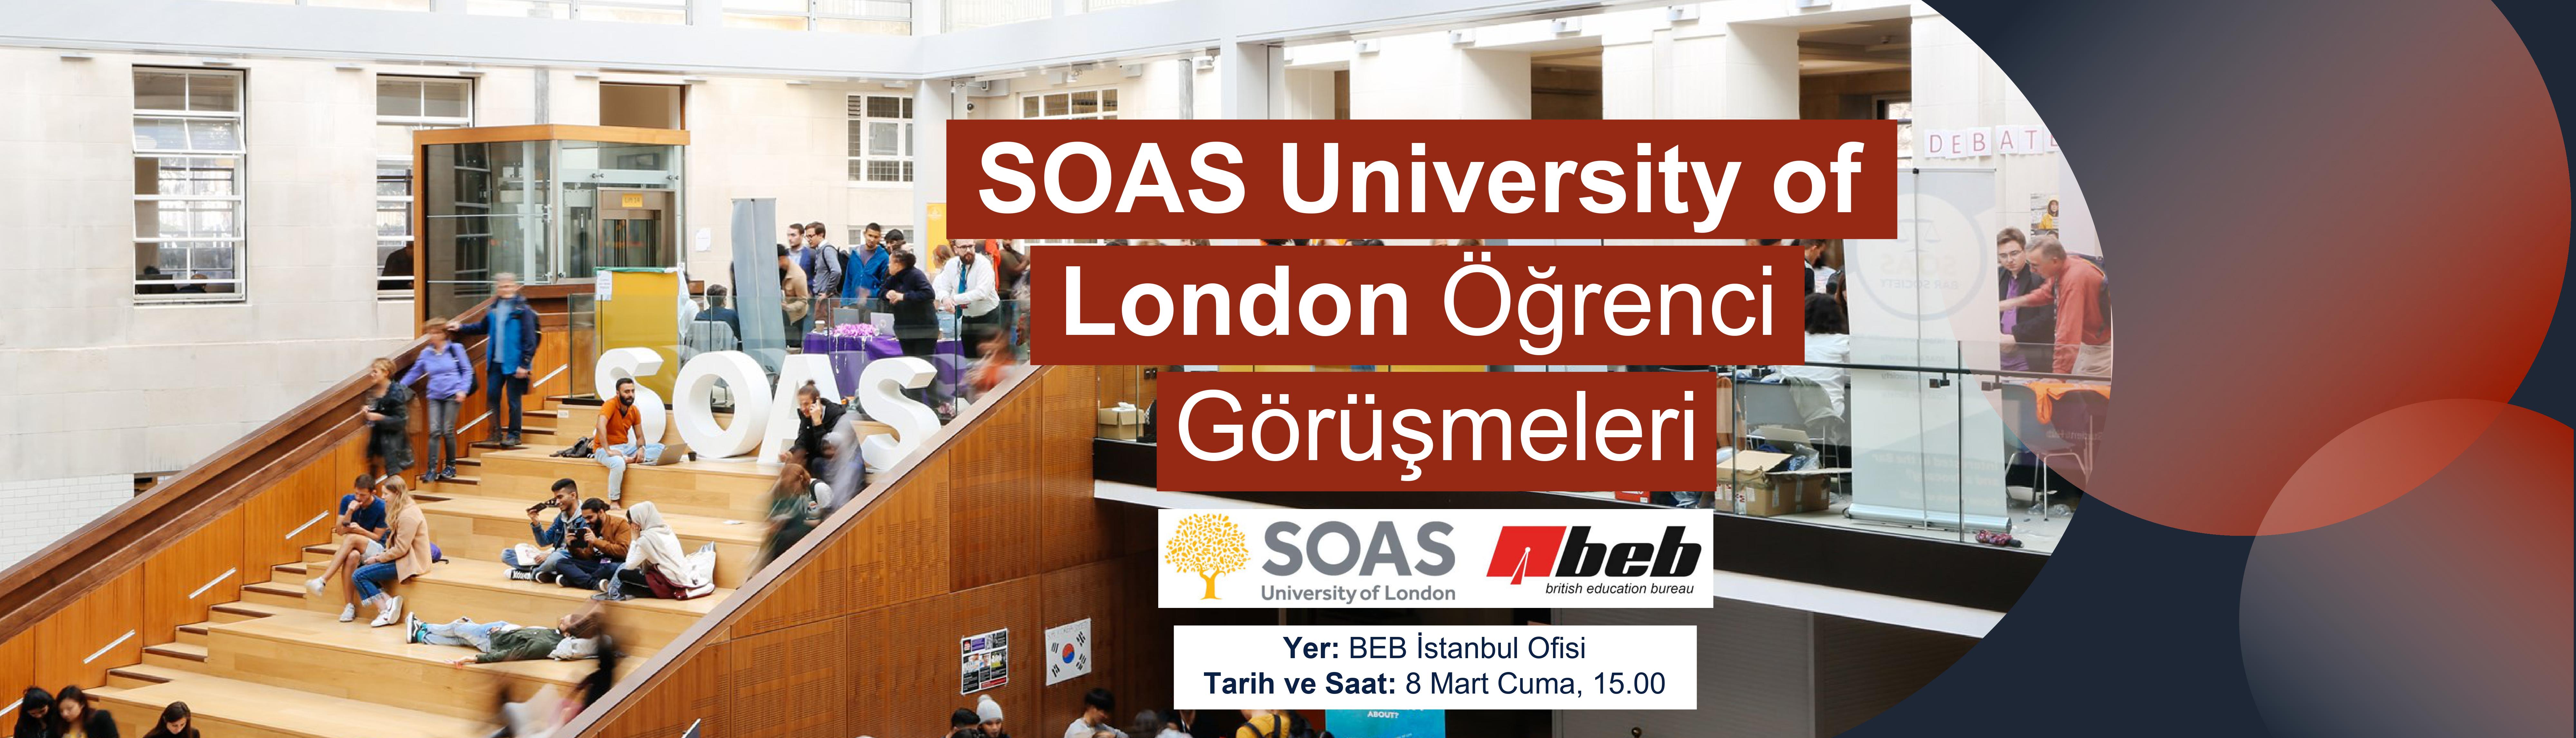 BEB-Ofisinde-SOAS-University-of-London-Ogrenci-Gorusmeleri